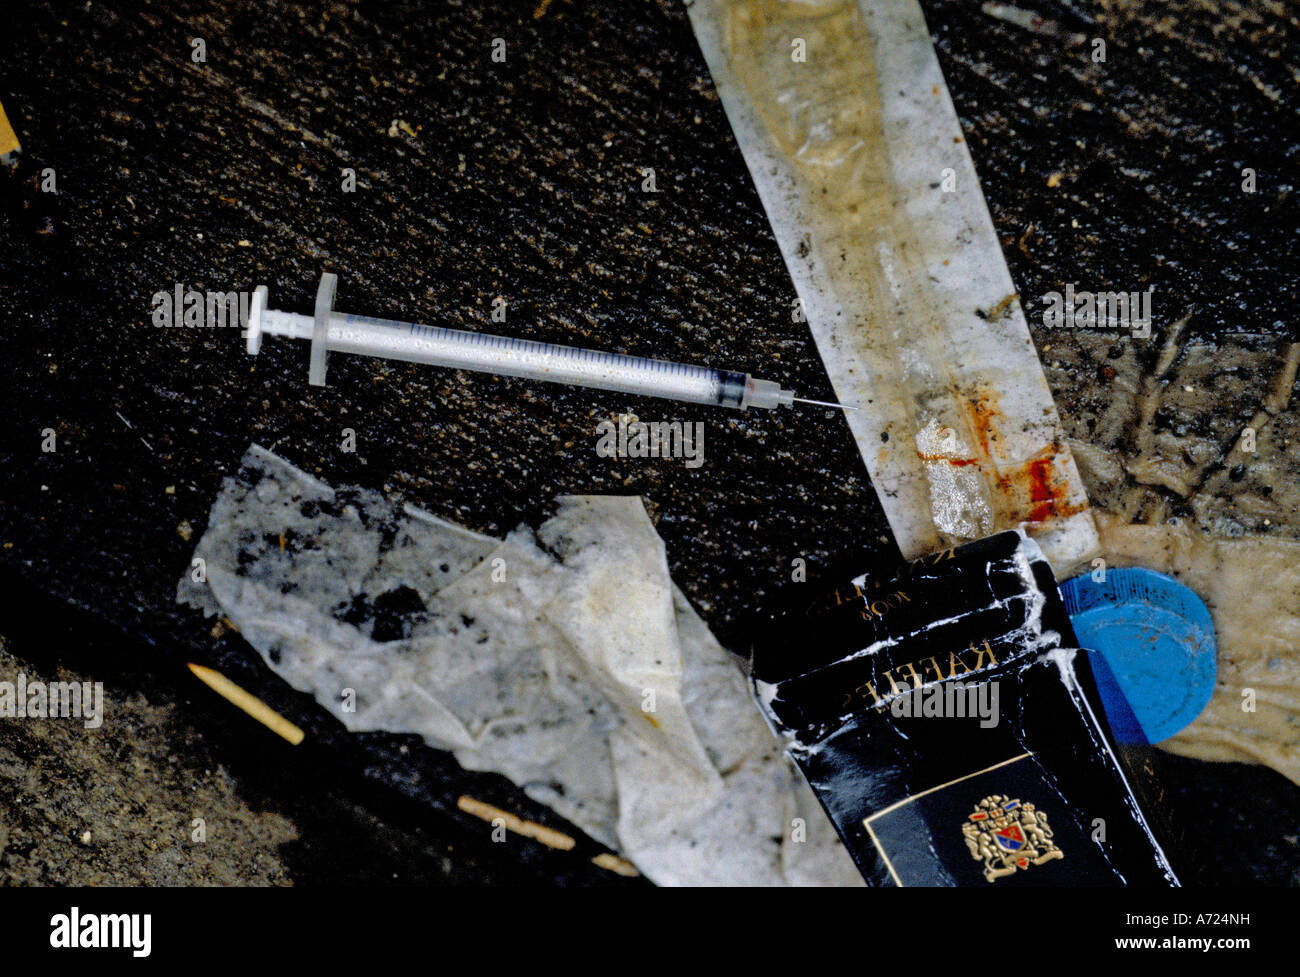 Detritus of drug abuse in the backstreets of Kings Cross Stock Photo